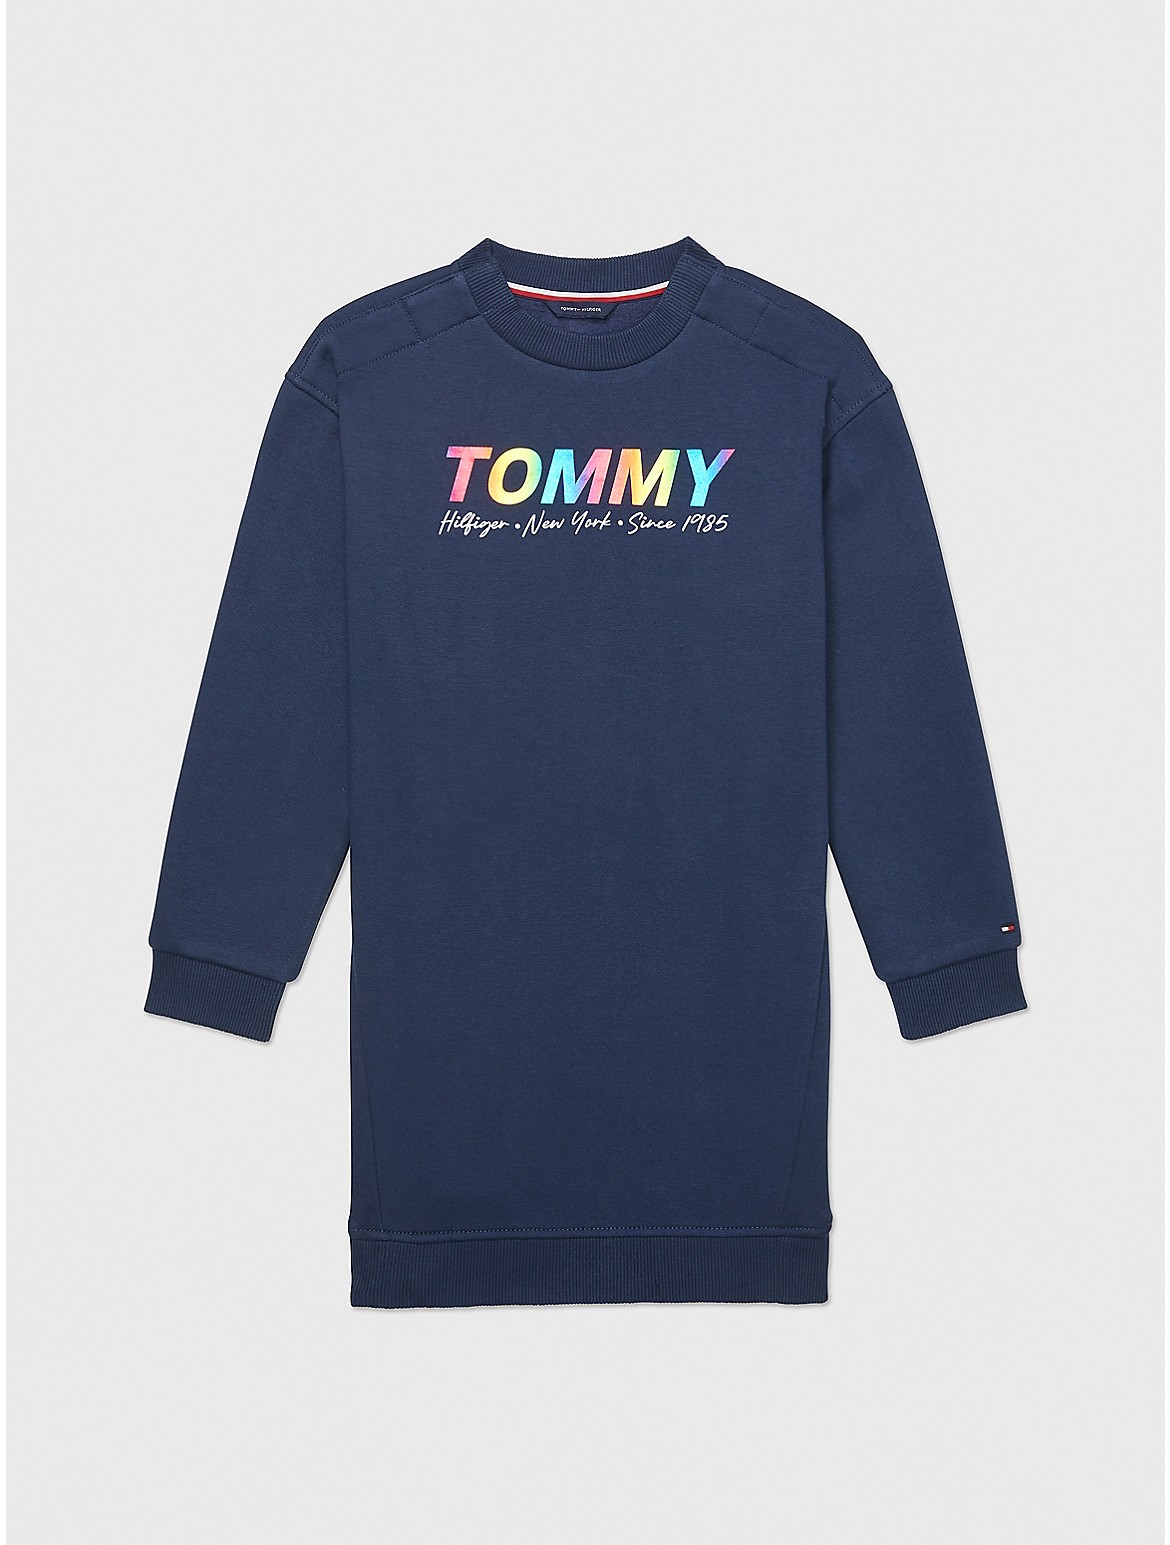 Tommy Hilfiger Girls' Kids' Tommy Shine Sweatshirt Dress